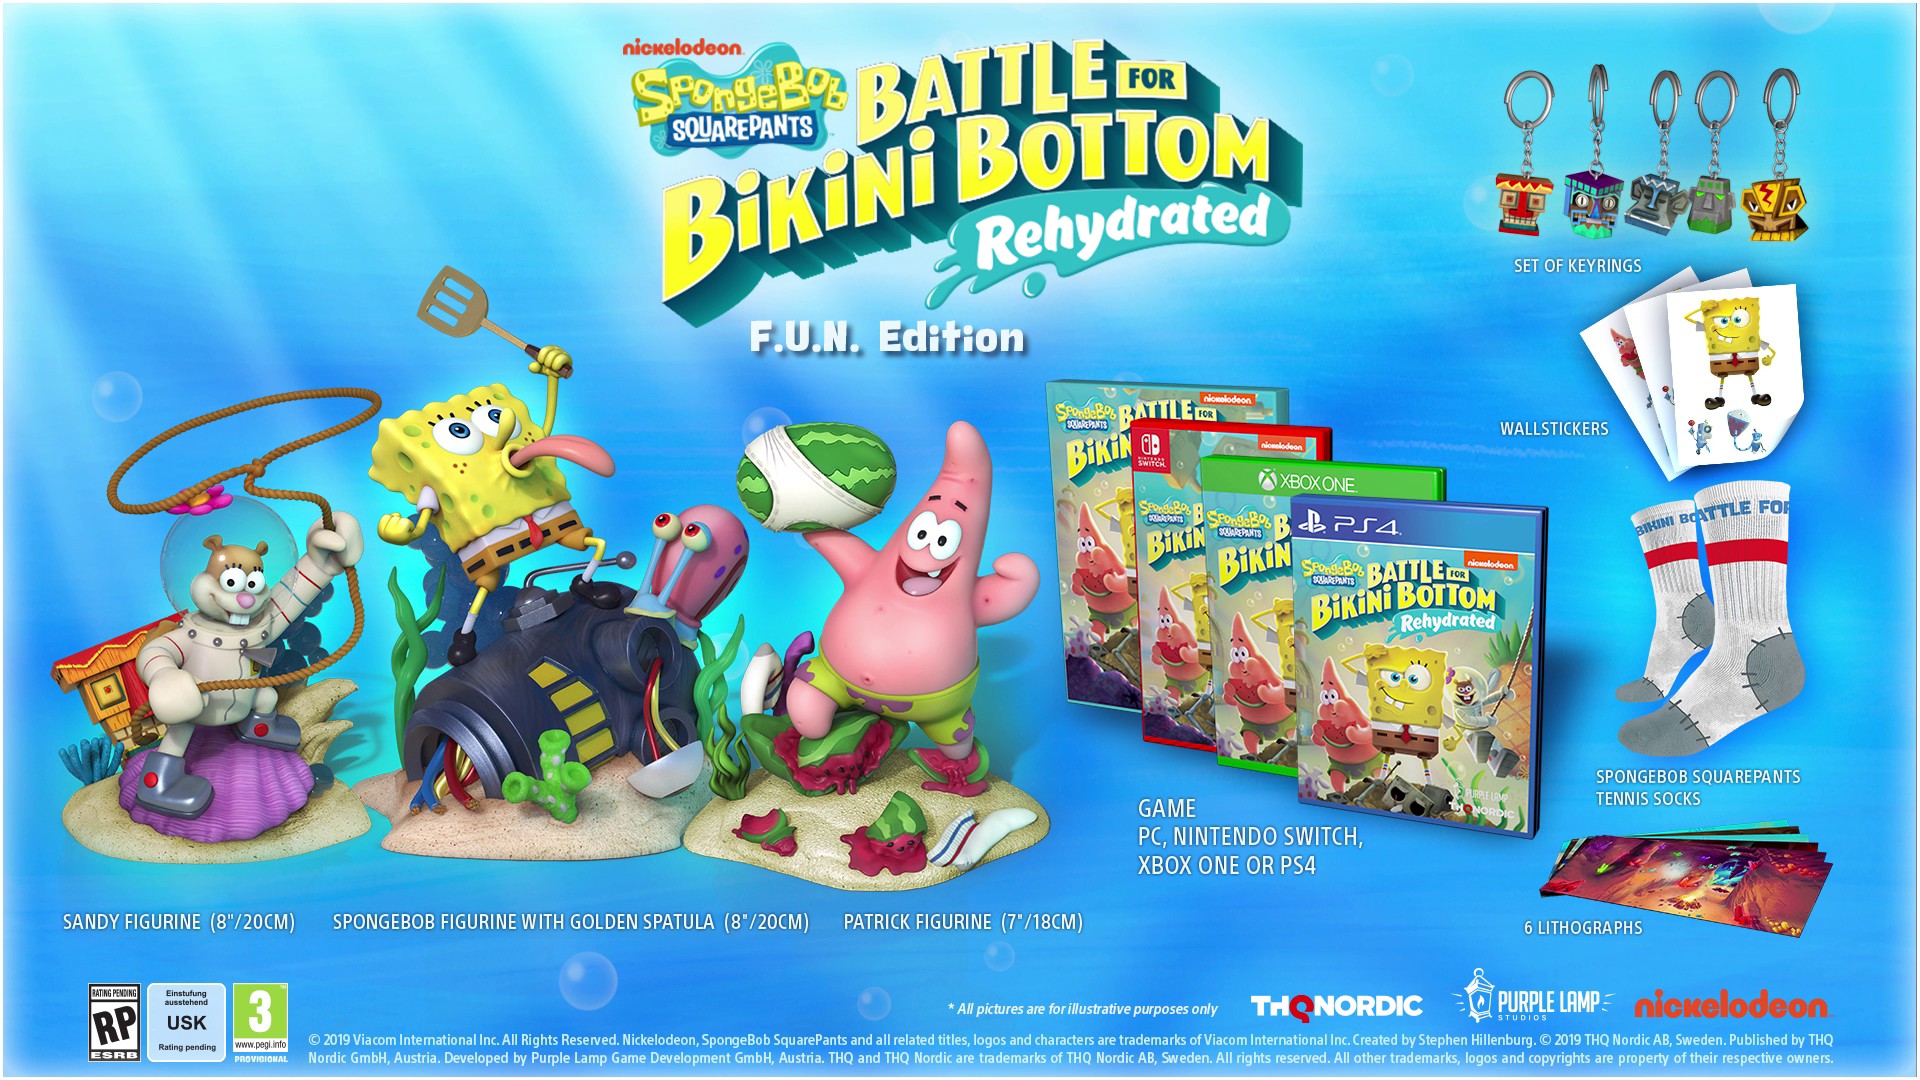 Bikini Bottom bargains: Pats' SpongeBob jerseys up for auction